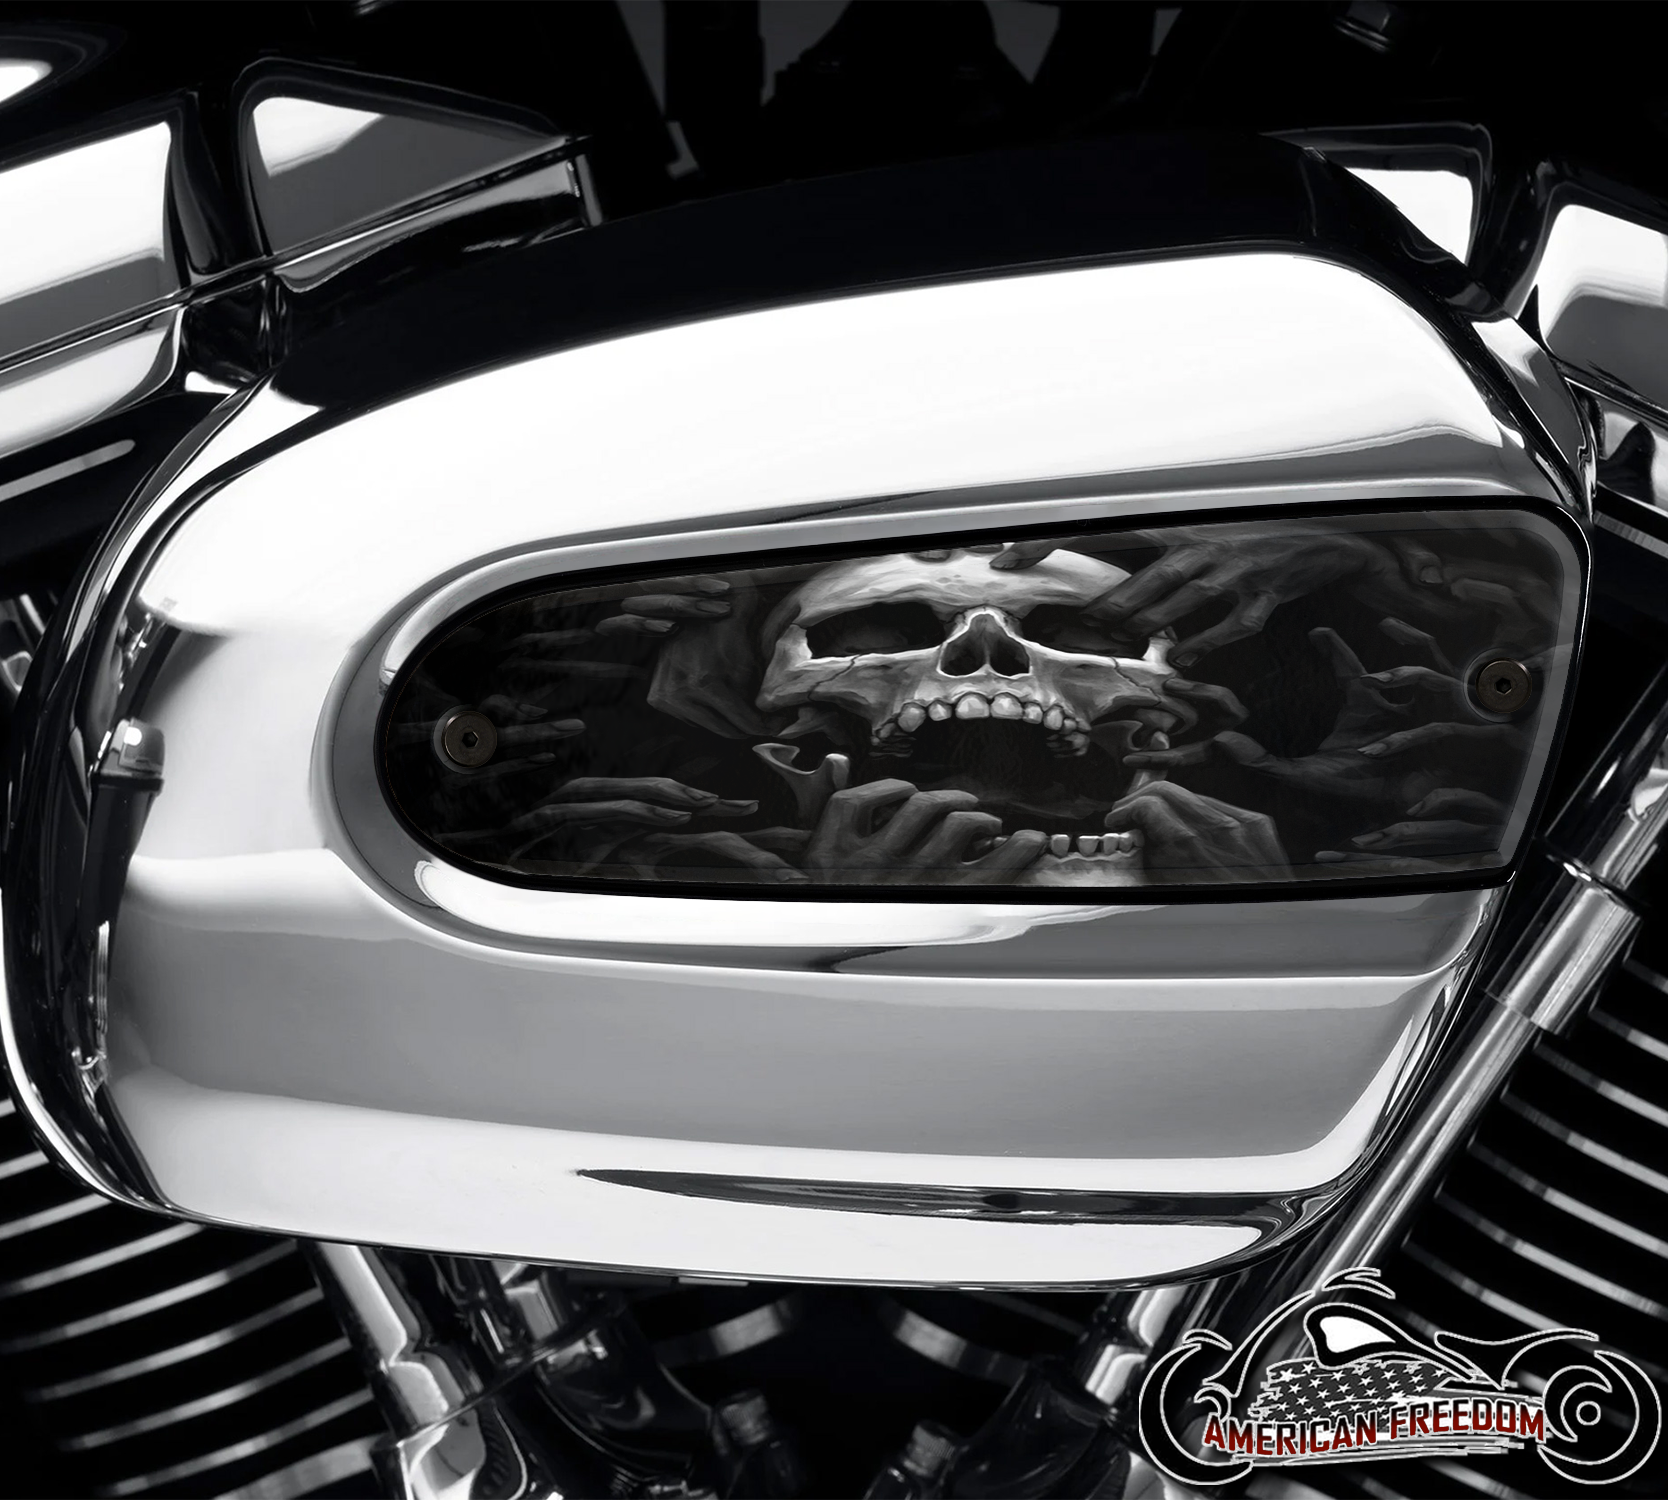 Harley Davidson Wedge Air Cleaner Insert - Torn Apart Skull B&W